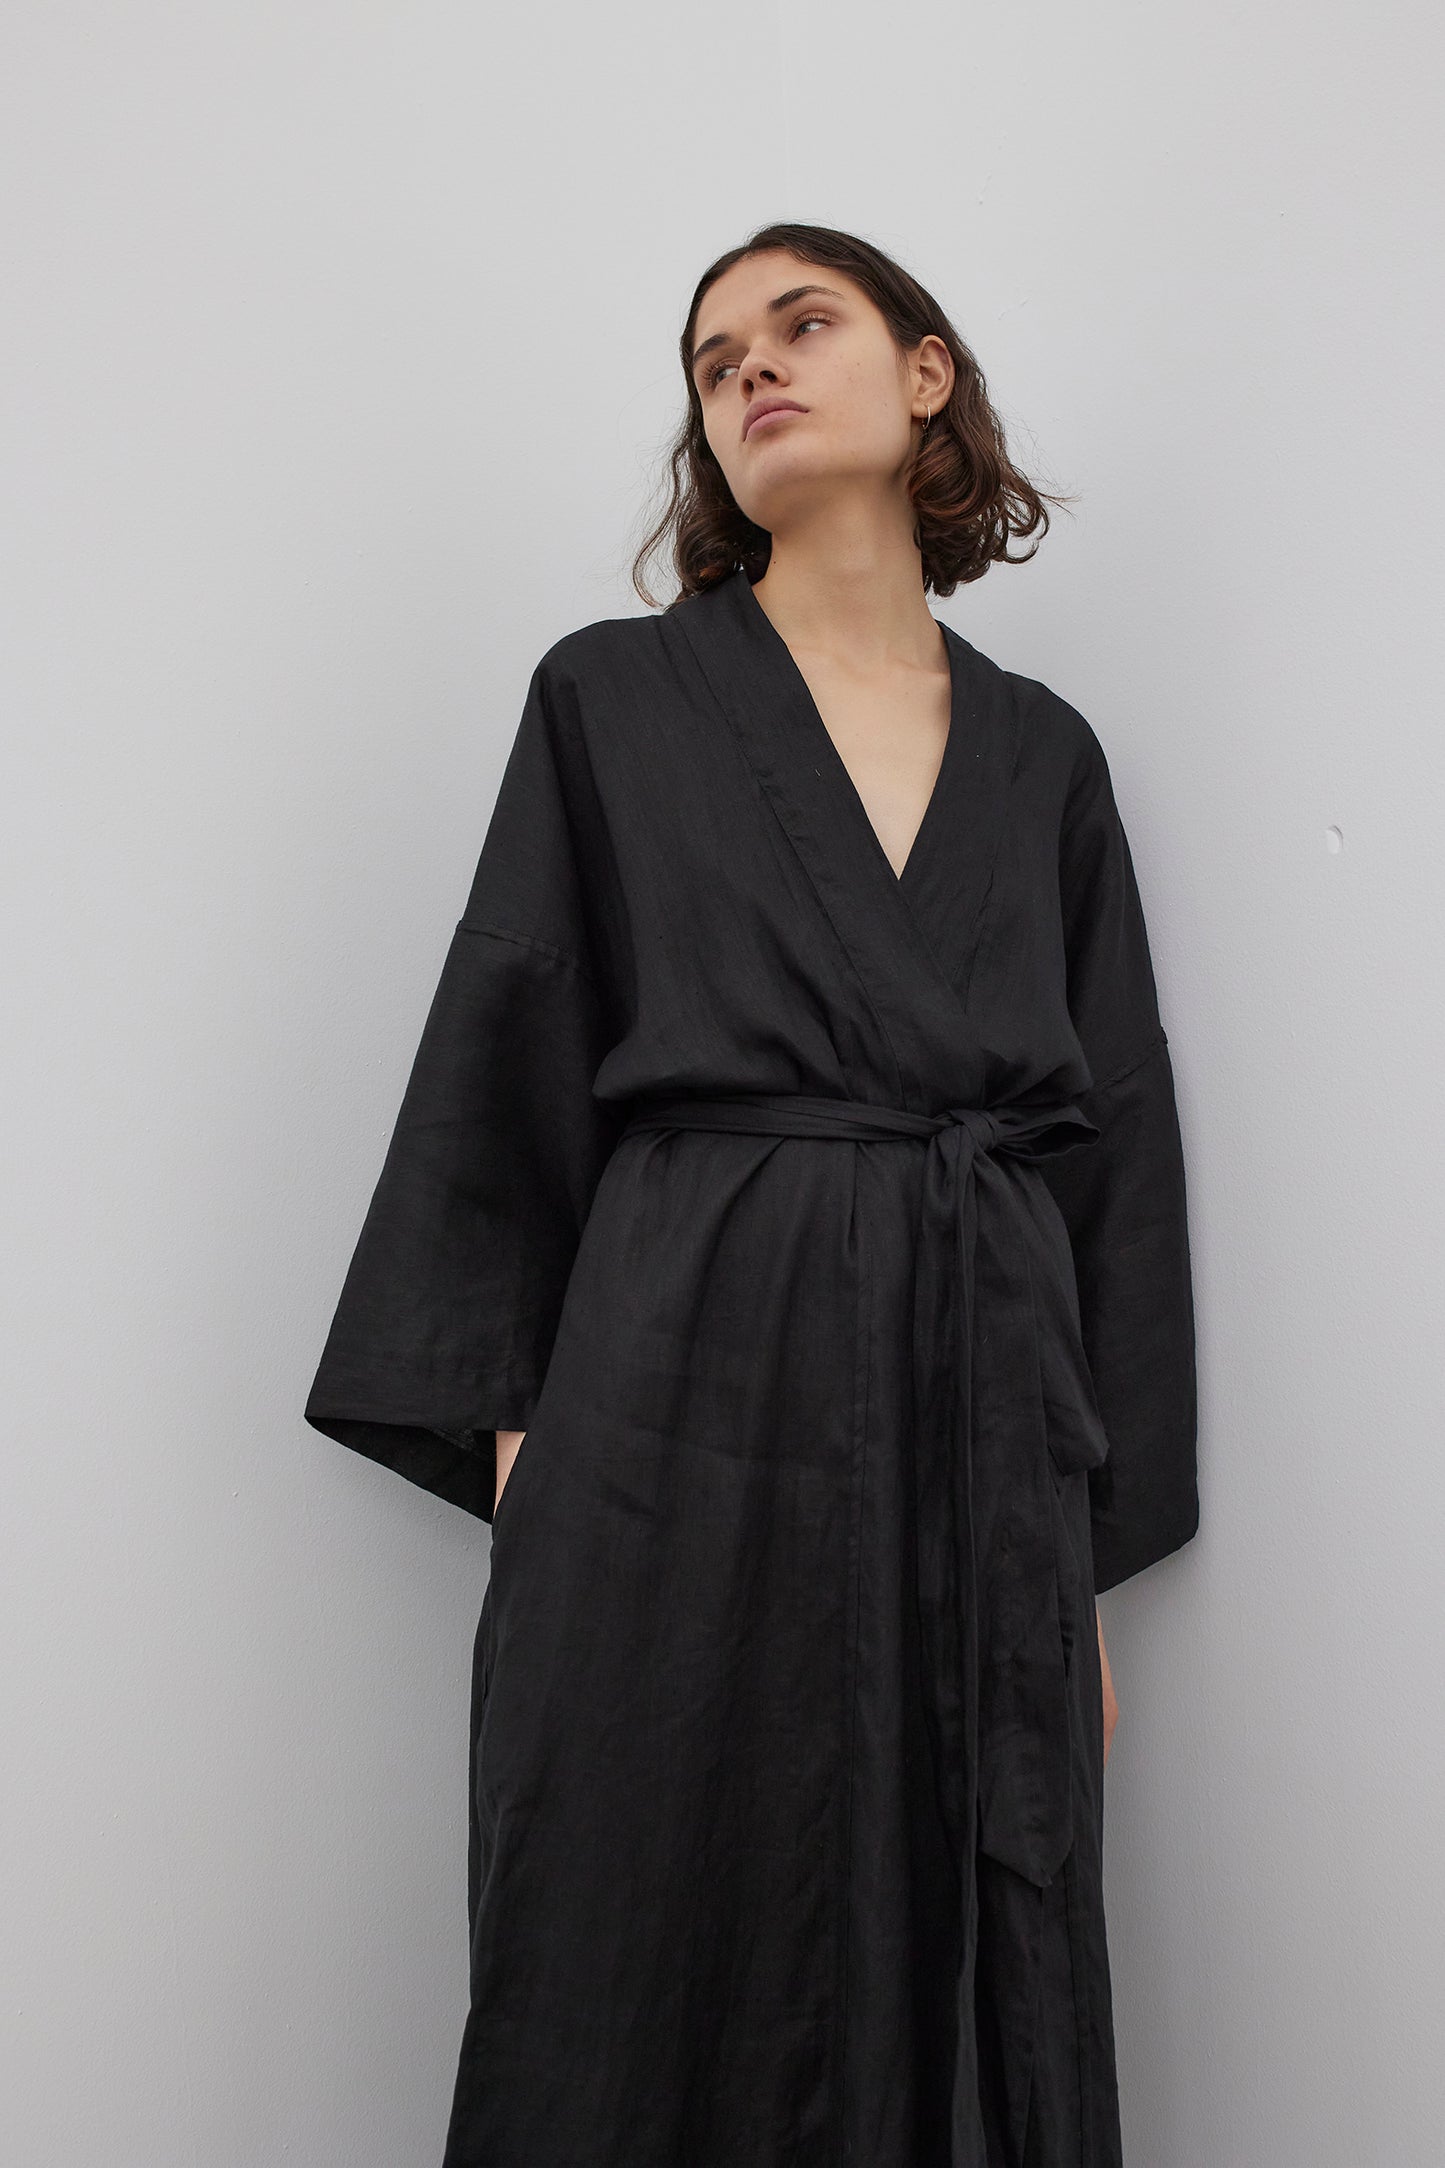 Female model wearing the 02 robe - deep black by Deiji Studios against plain background